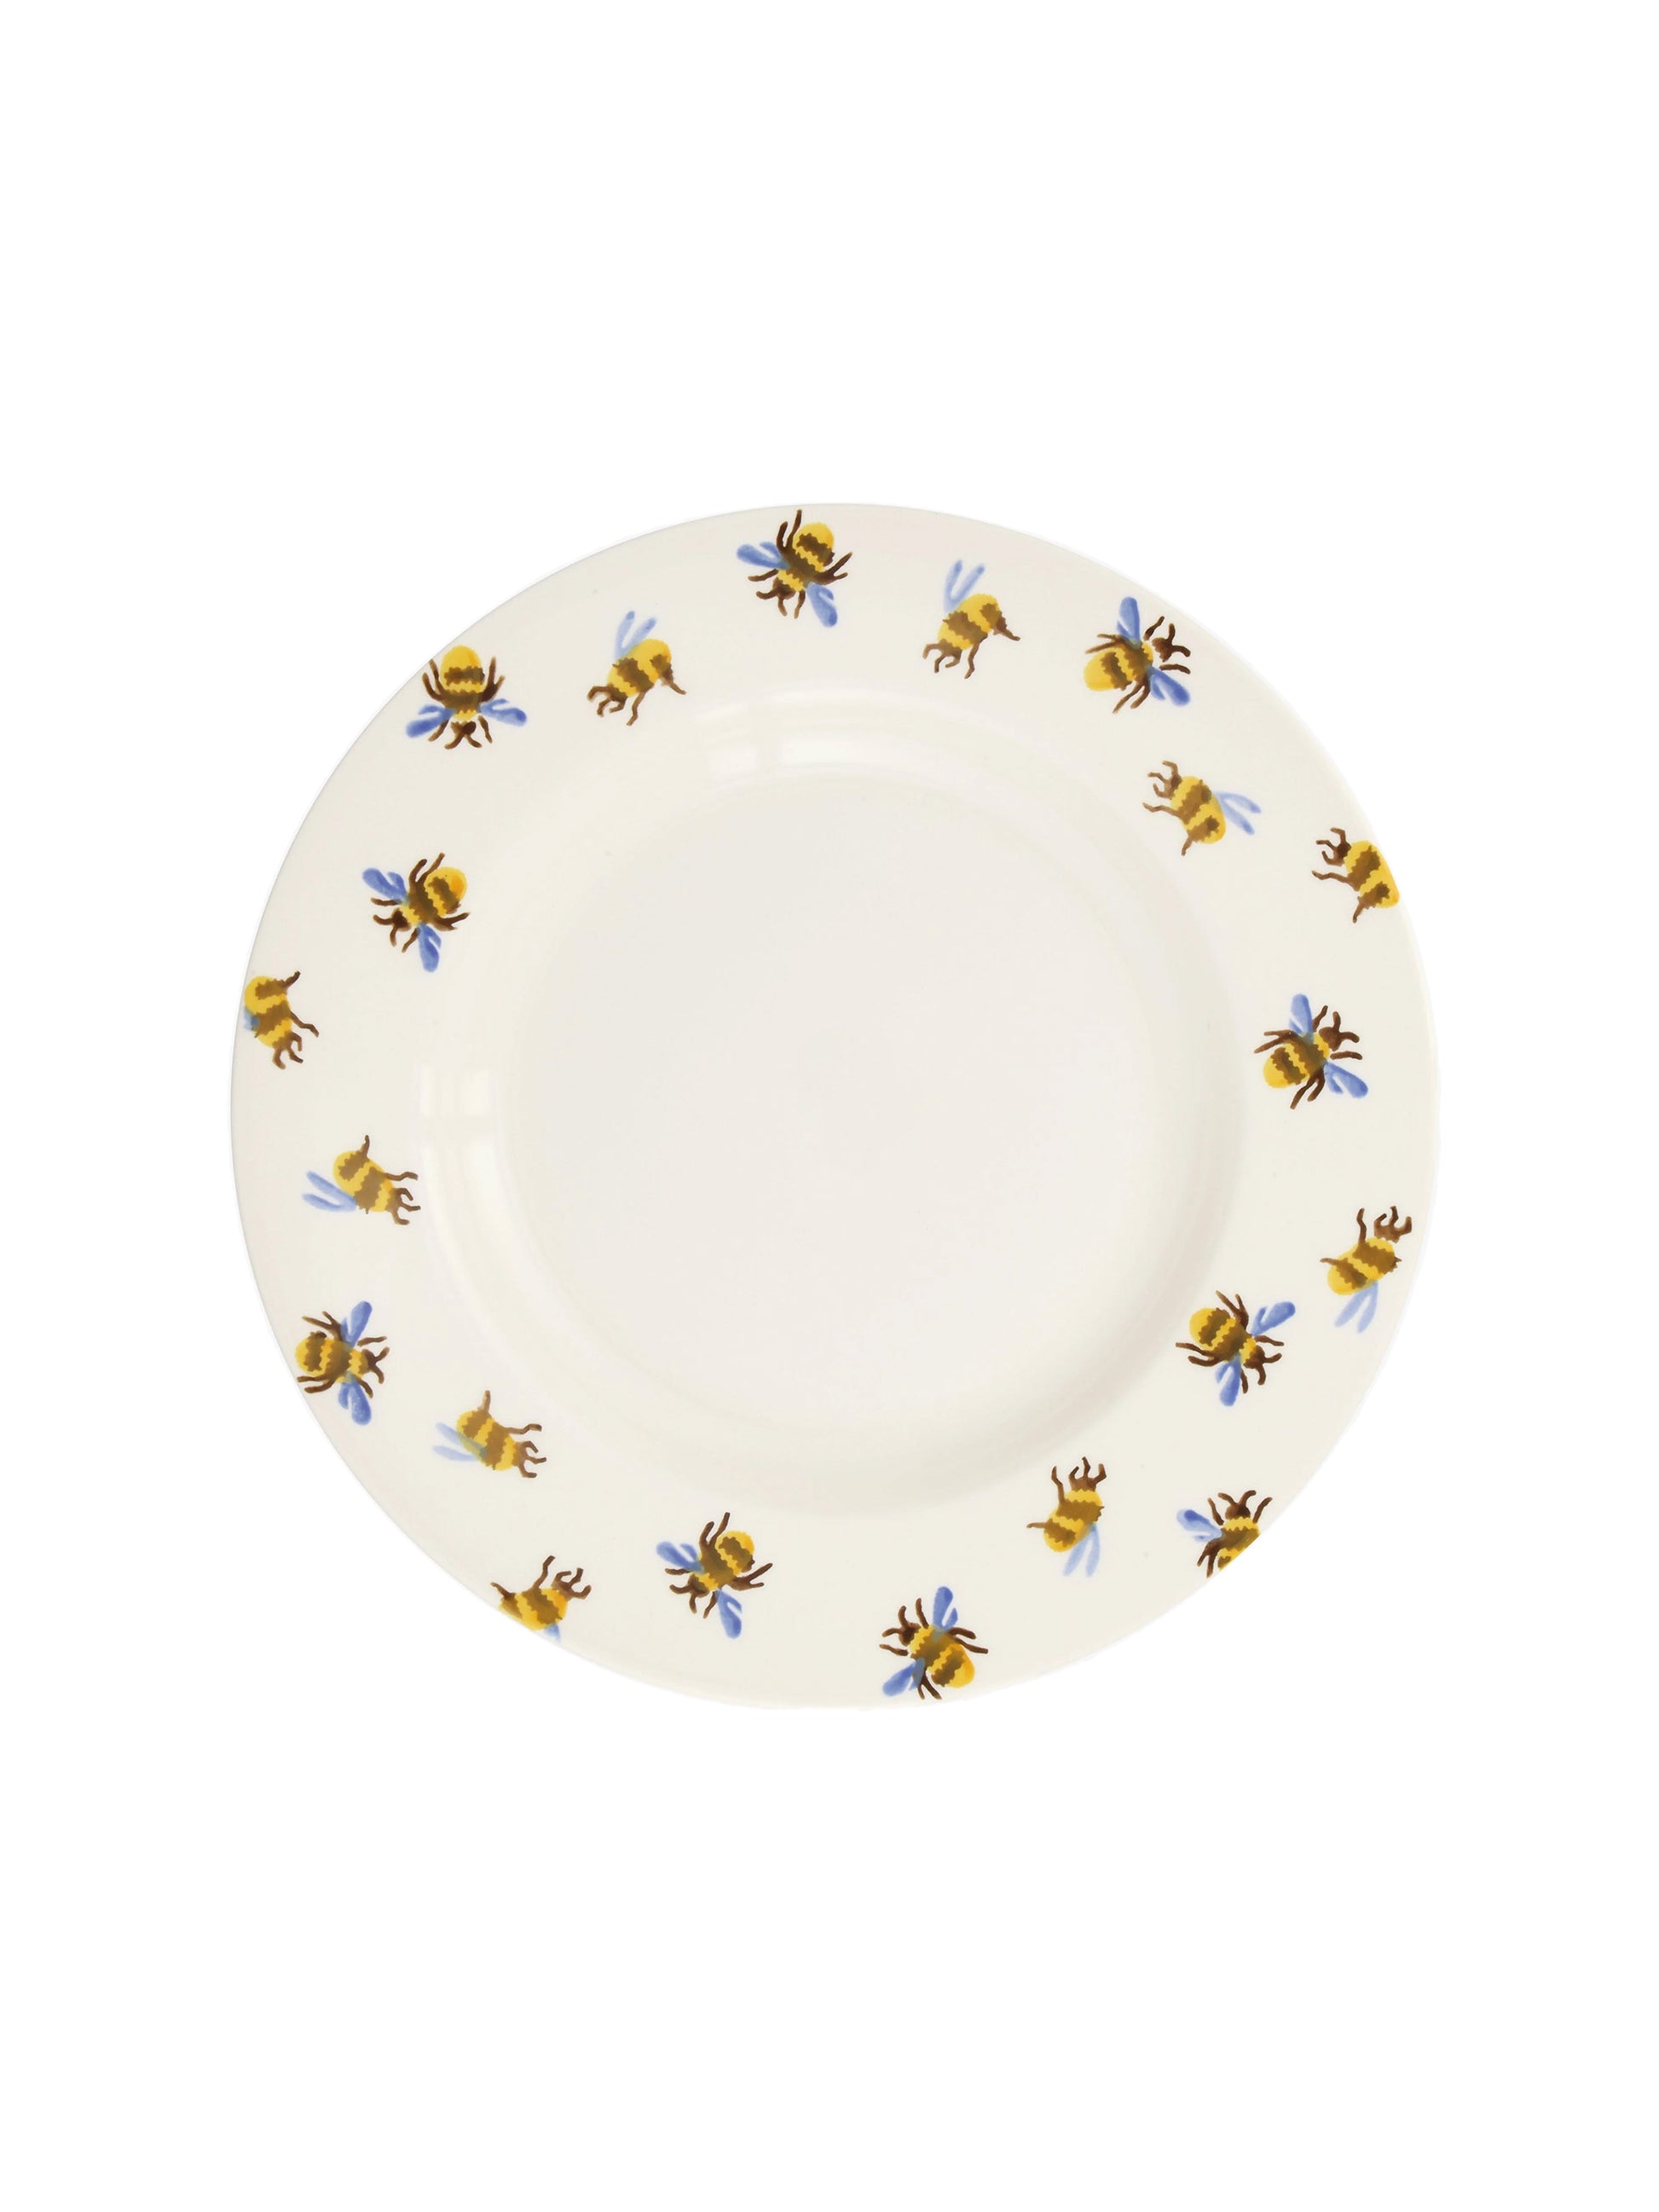 Emma Bridgewater Bumblebee 10.5 Inch Plate Weston Table